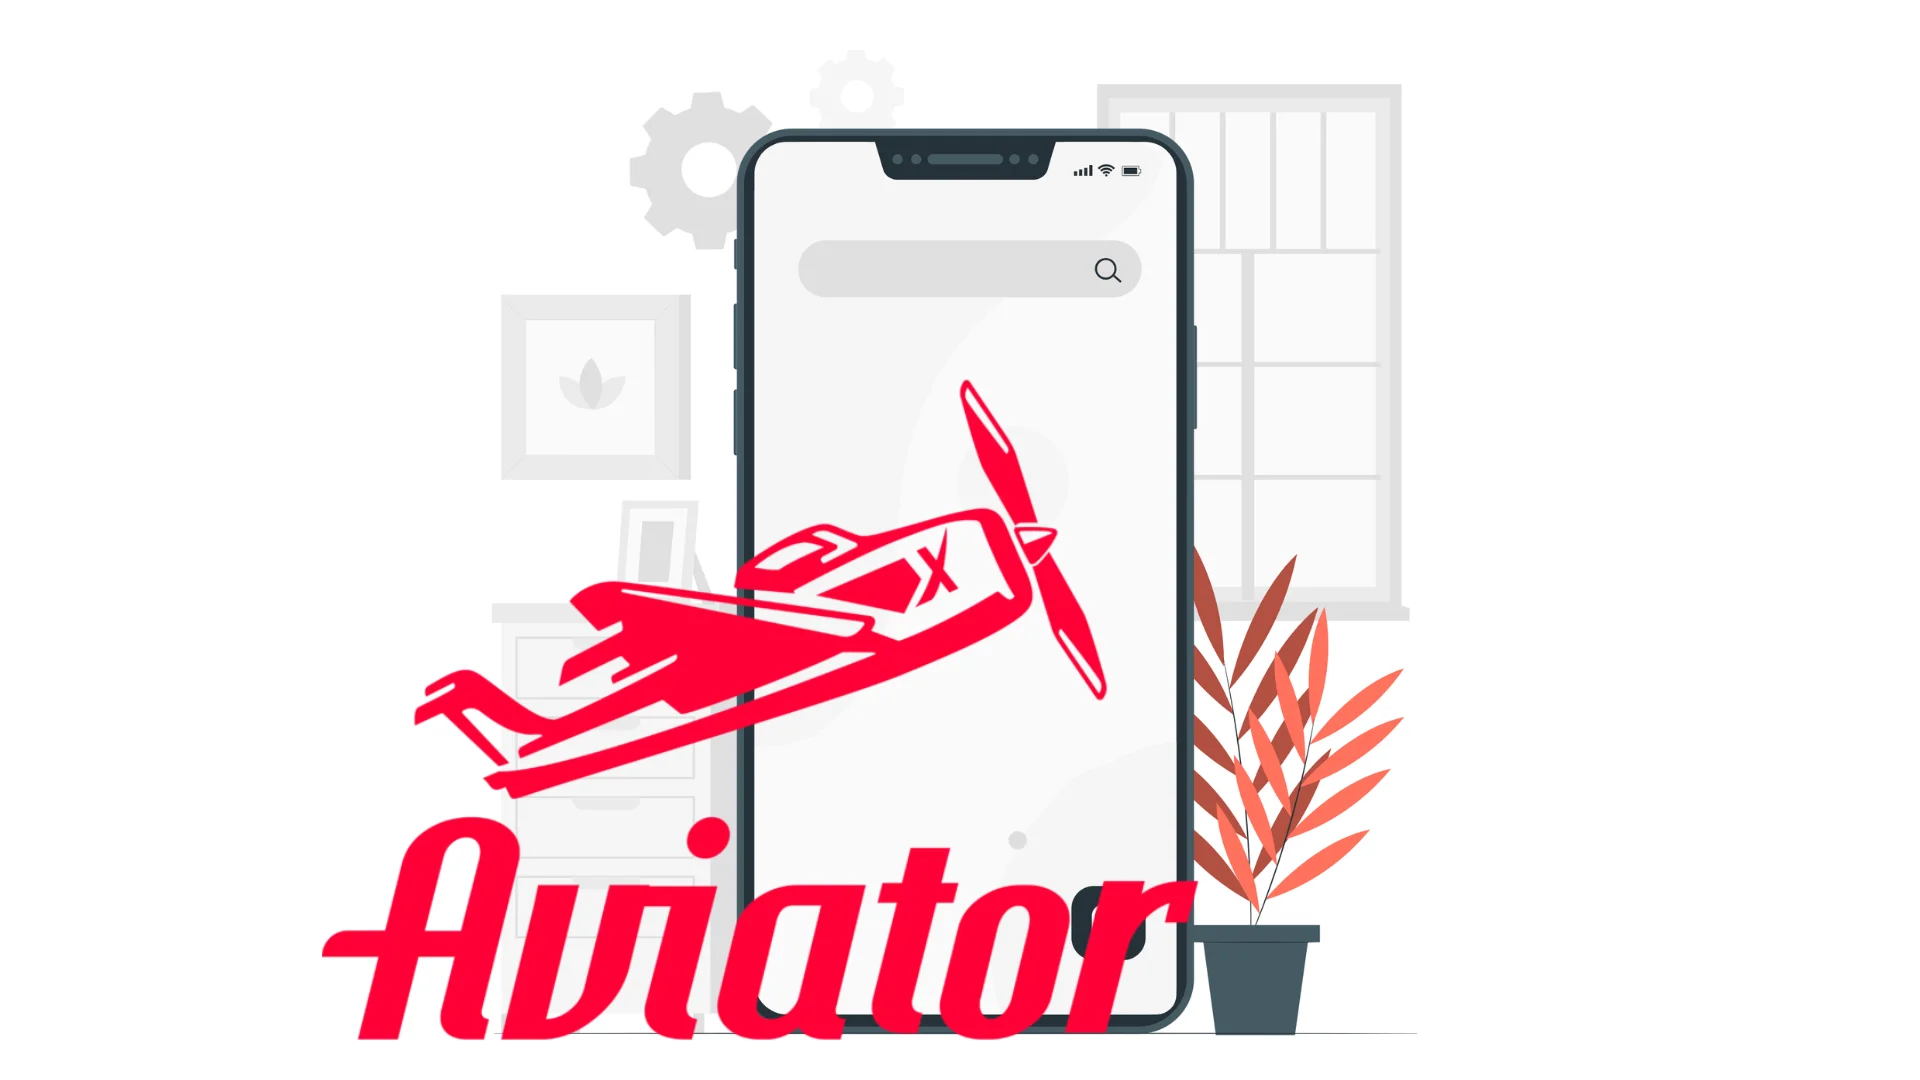 Aviator logo and mobile phone